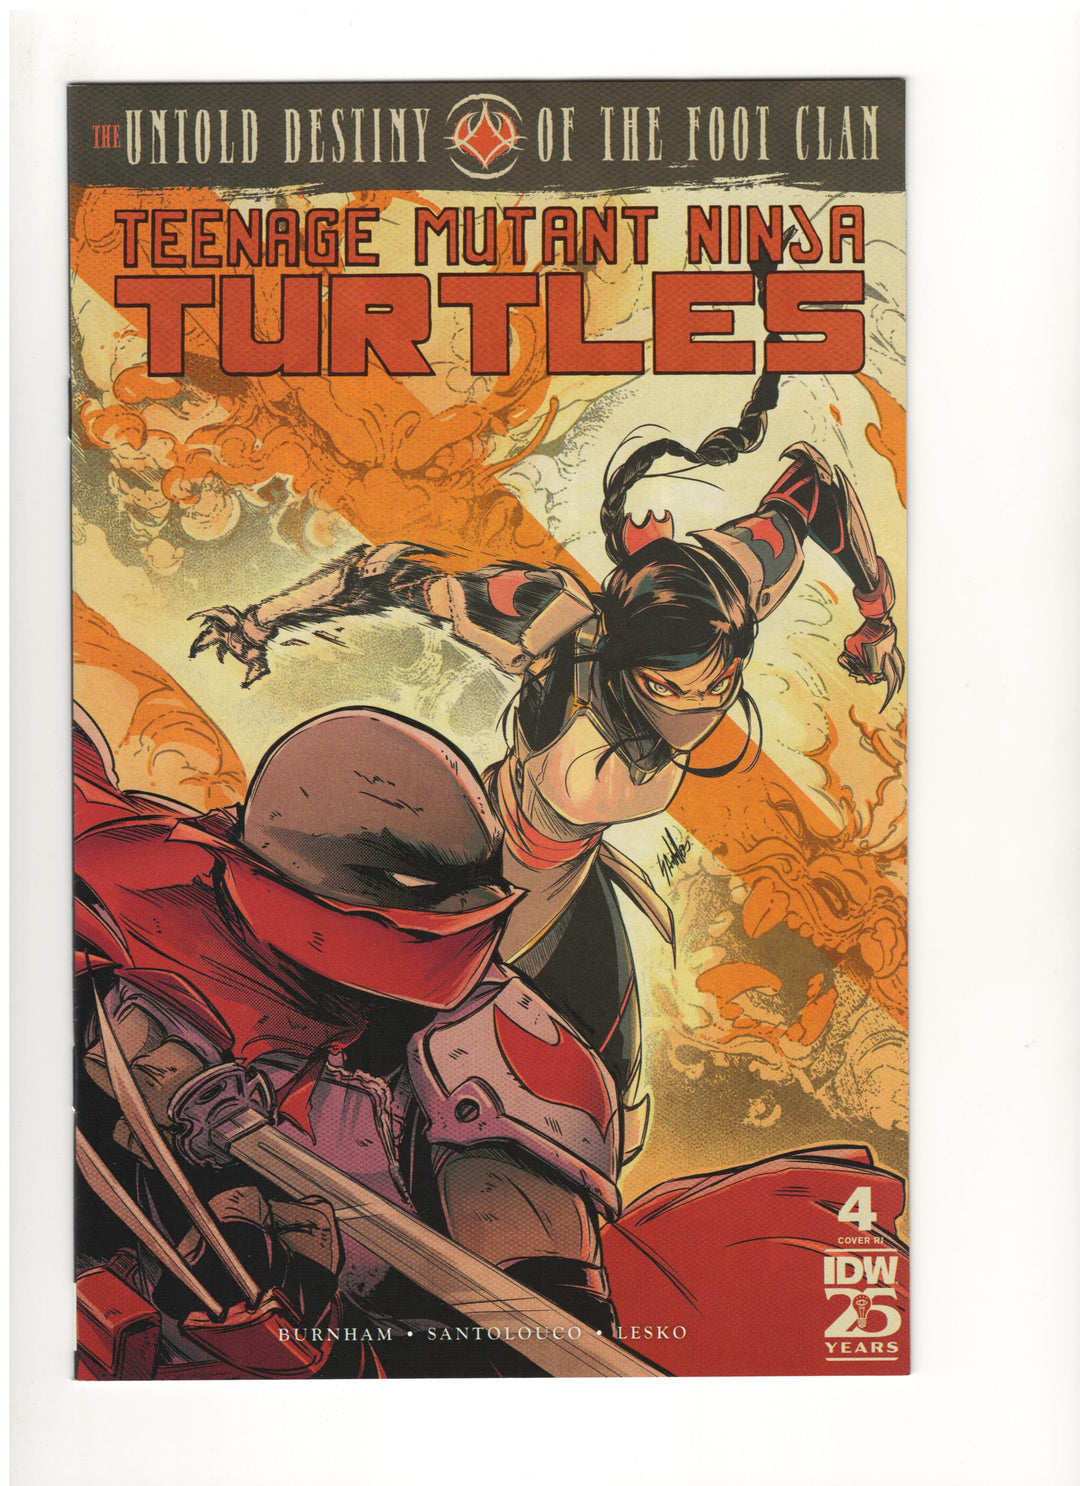 Teenage Mutant Ninja Turtles Untold Destiny Of Foot Clan #4 Variant (1:10) Santtos Edition